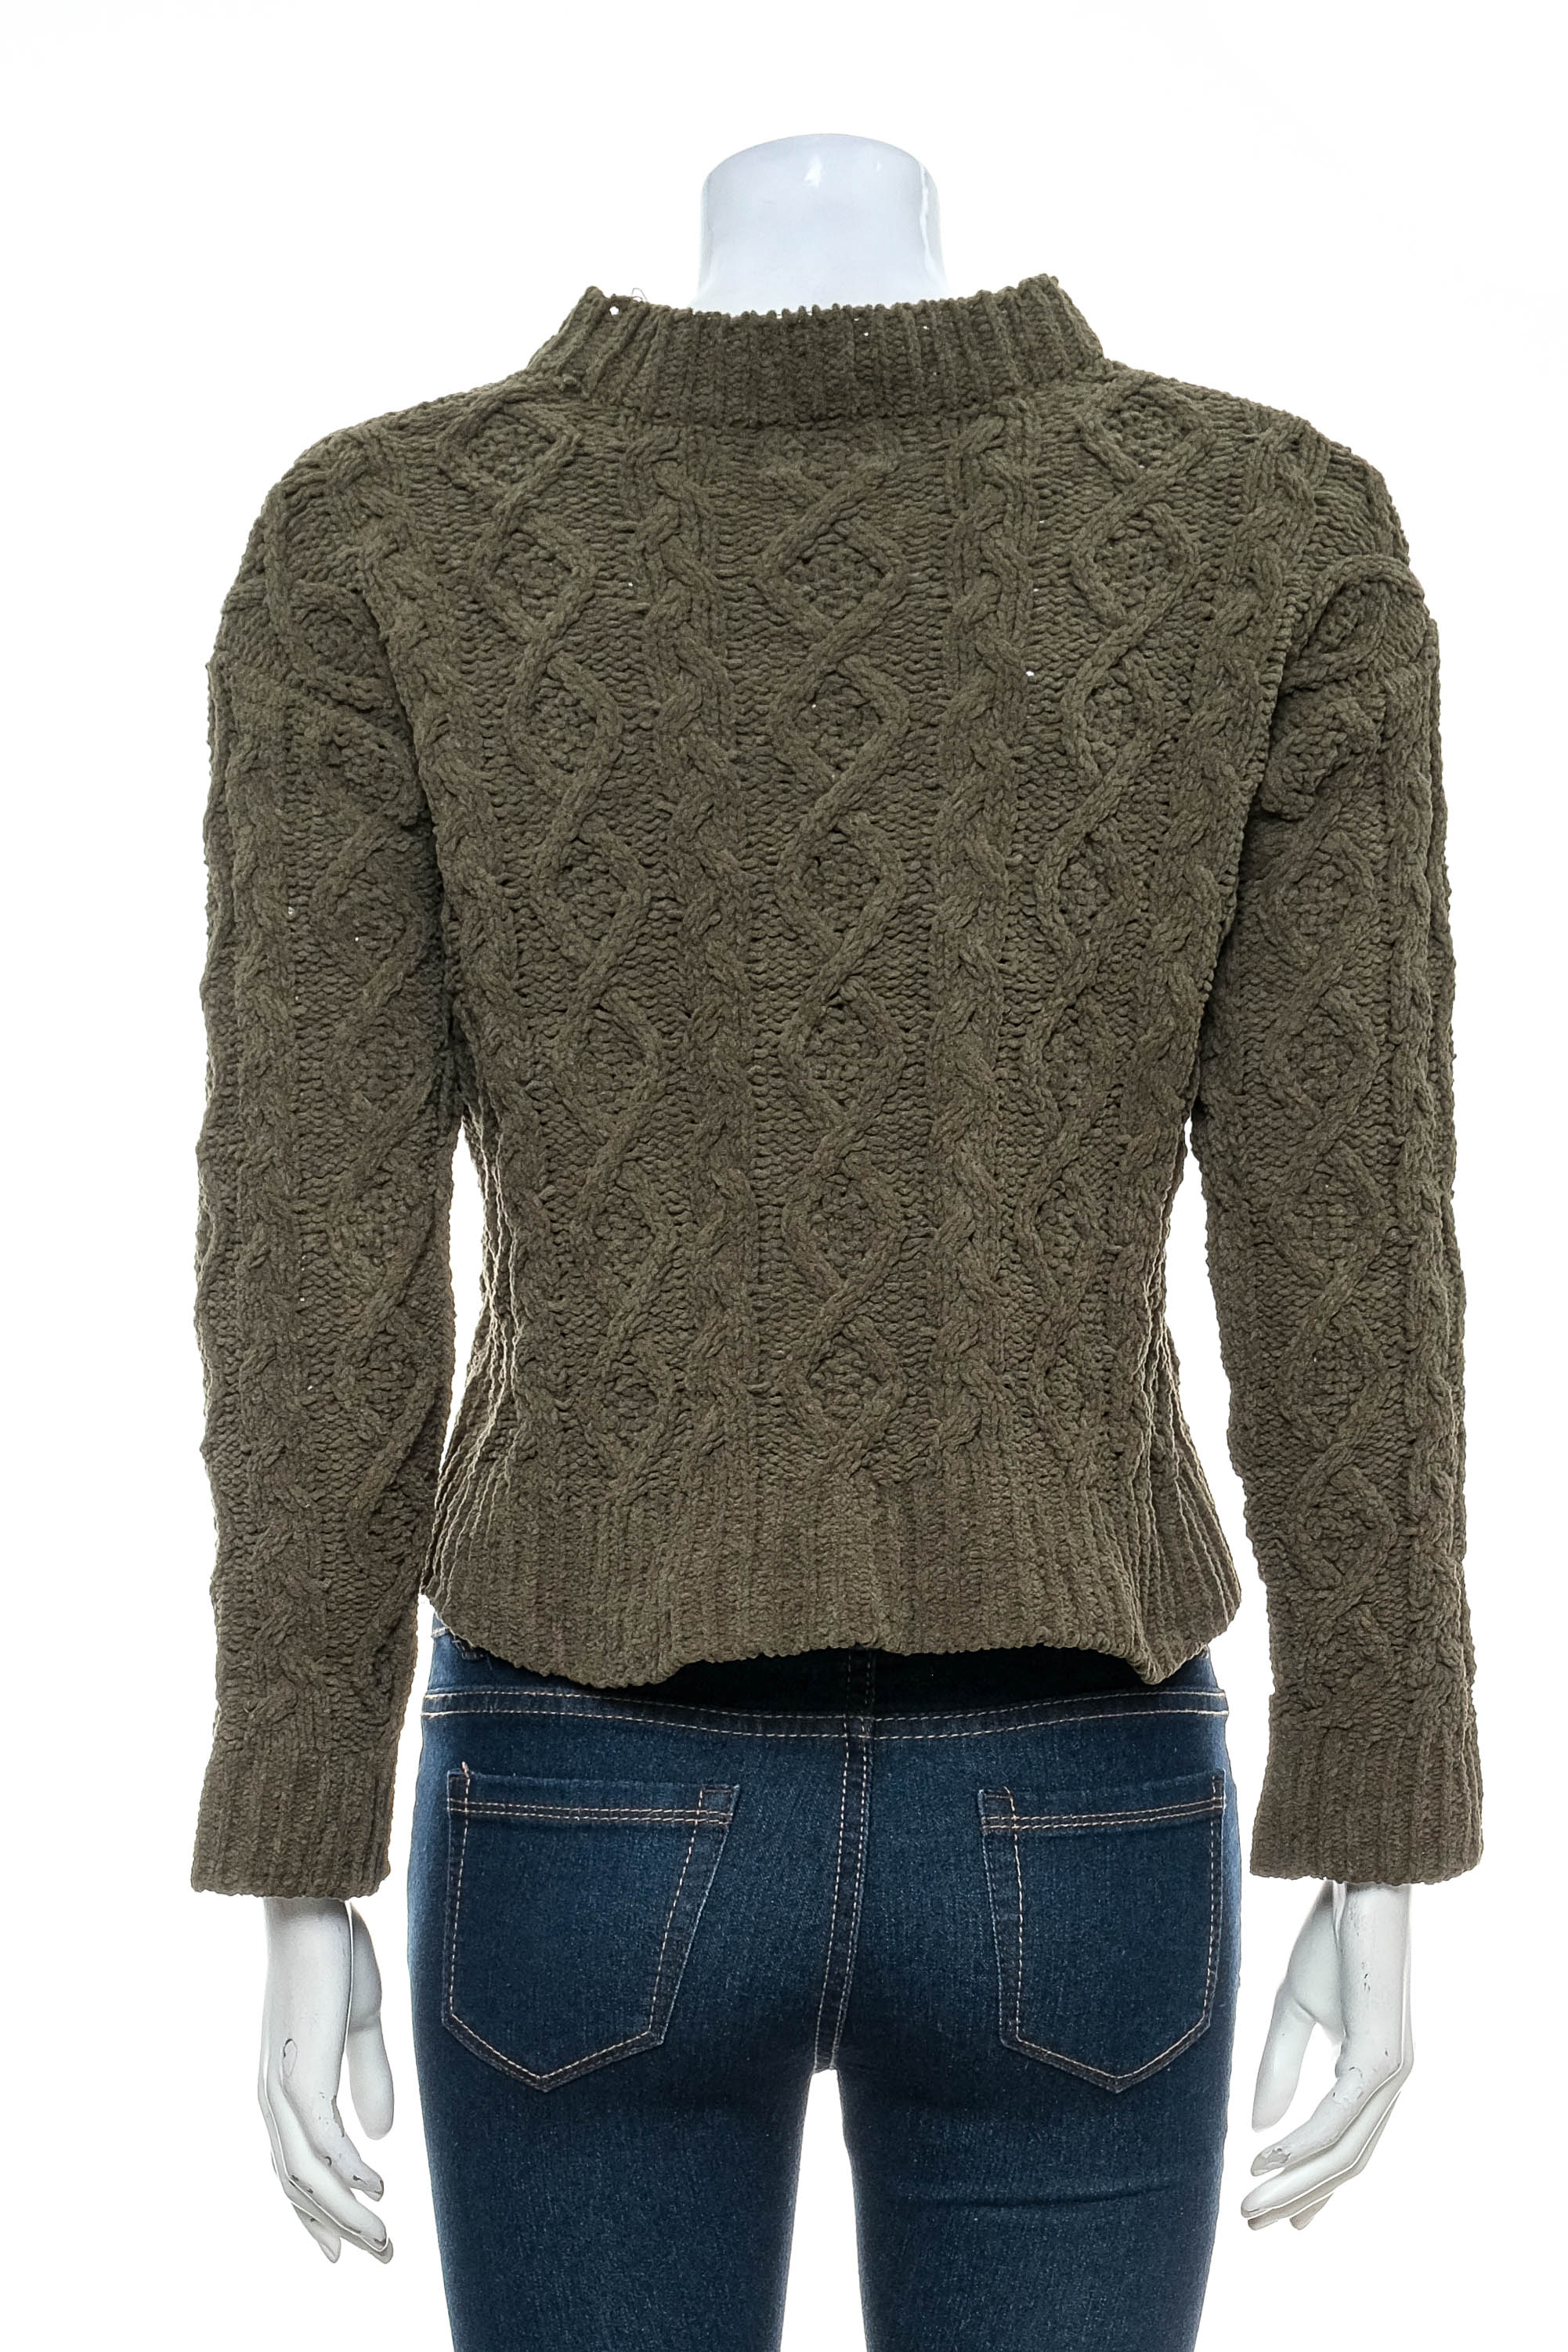 Women's sweater - Poof Apparel - 1